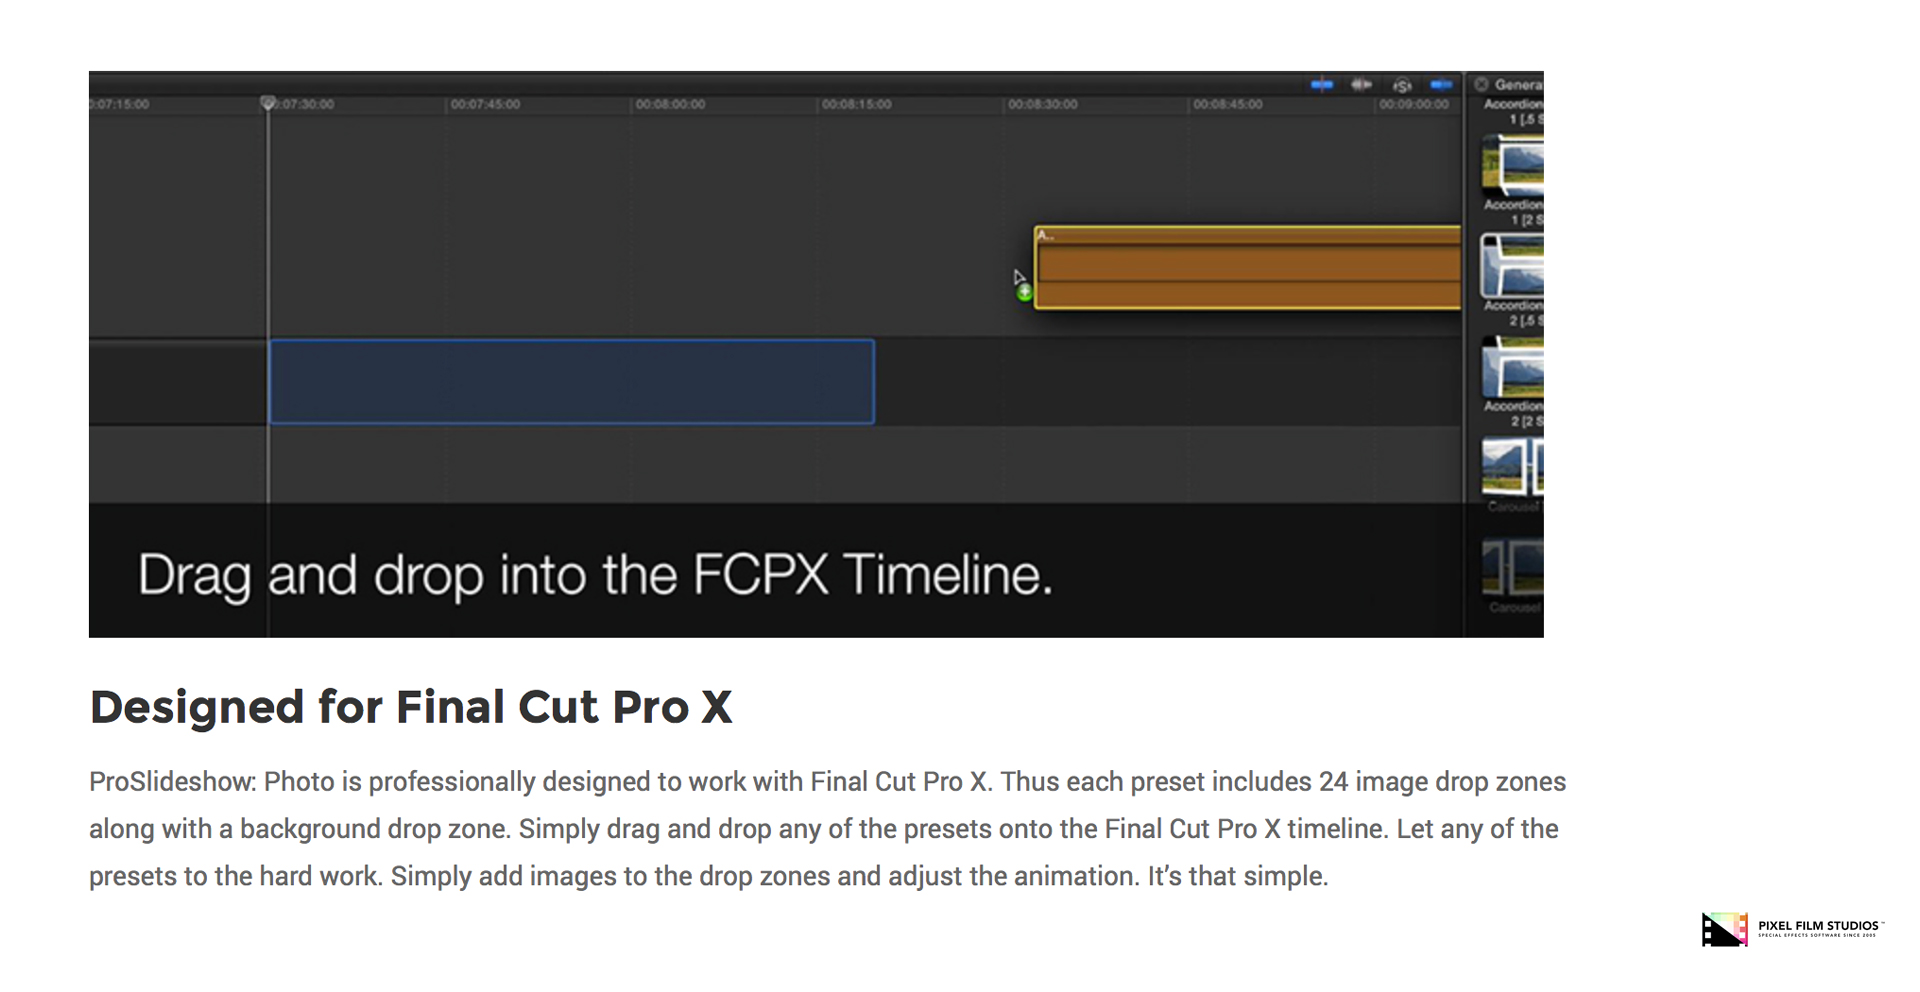 FCPX - ProSlideshow Photo - Pixel Film Studios Plugin